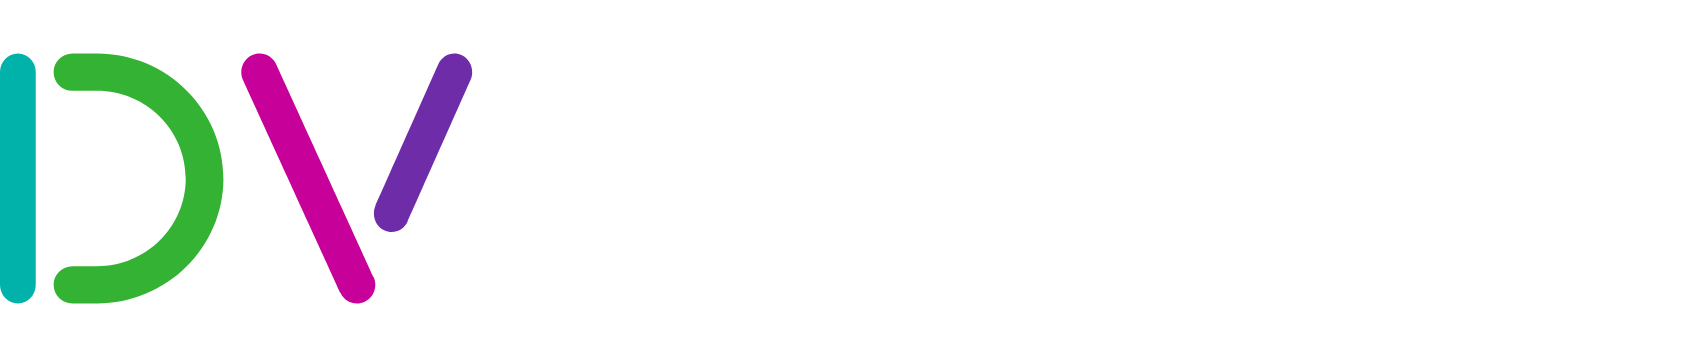 DoubleVerify logo large for dark backgrounds (transparent PNG)